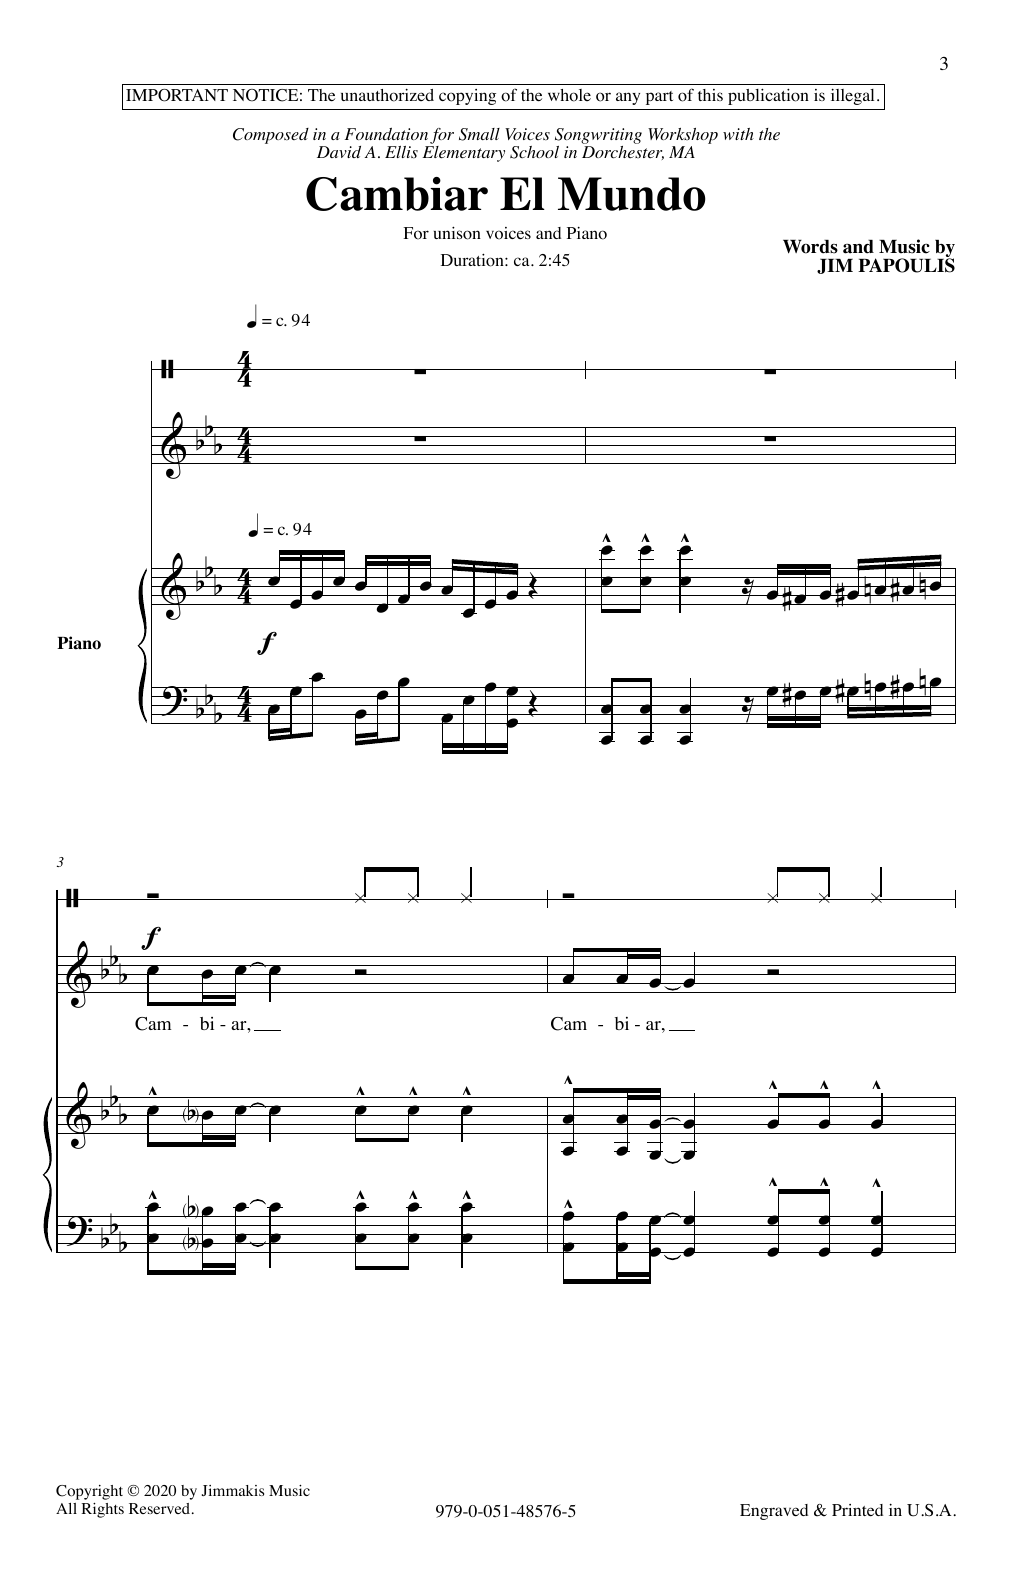 Jim Papoulis Cambiar El Mundo Sheet Music Notes & Chords for Unison Choir - Download or Print PDF